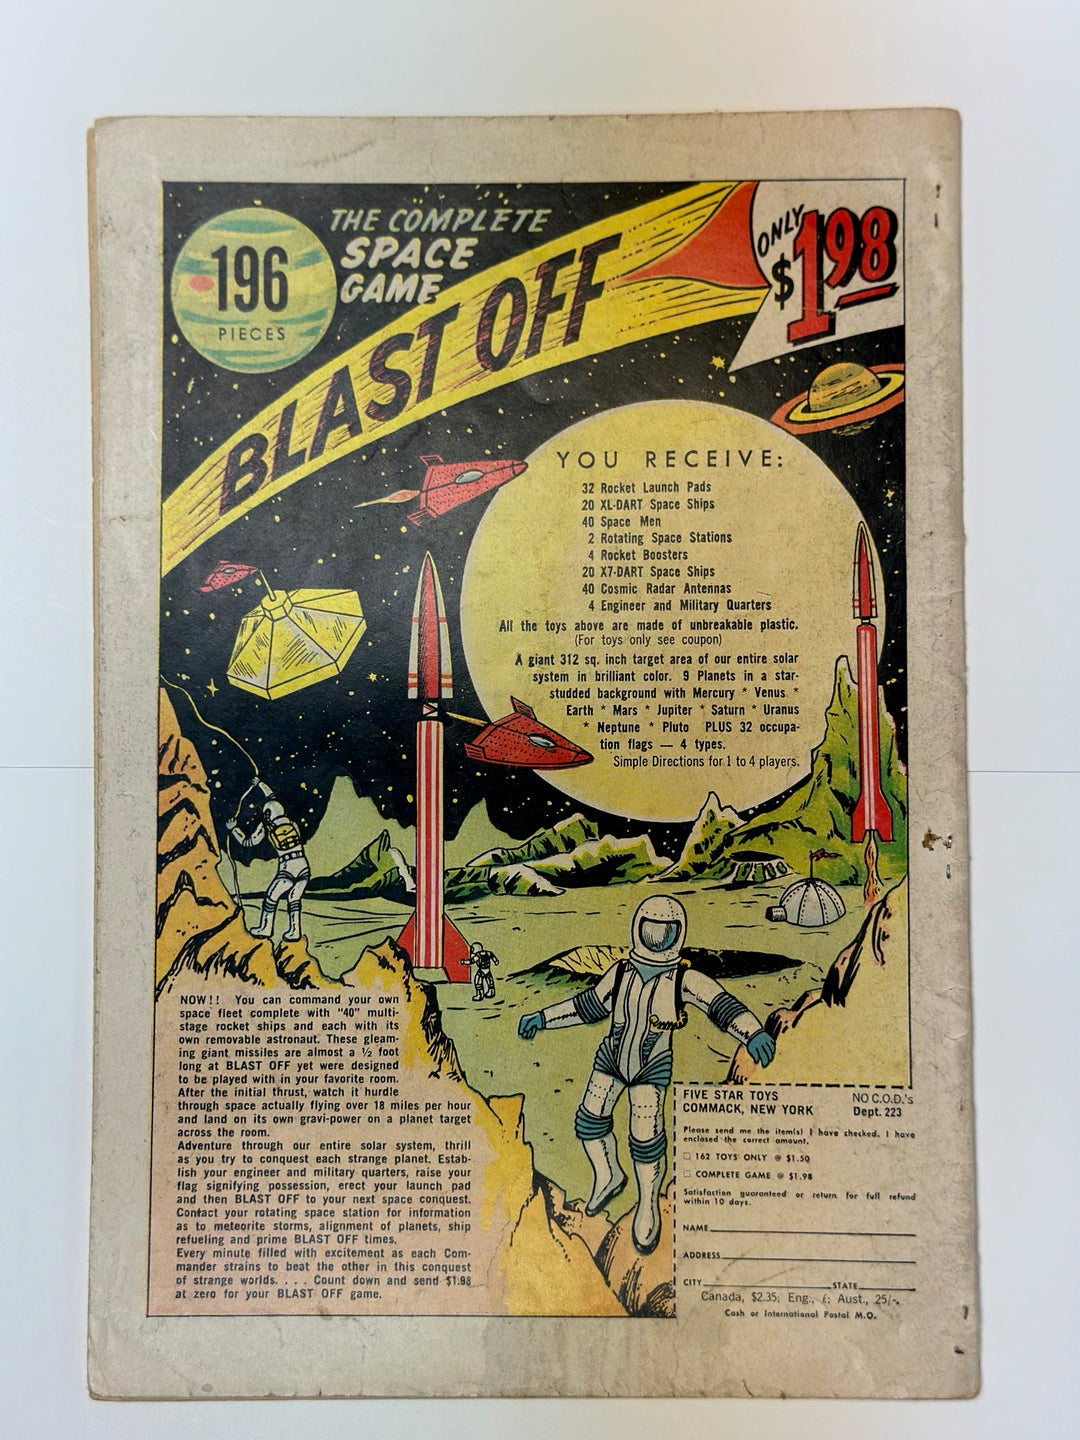 Batman (1940) #157 <OXB-01>